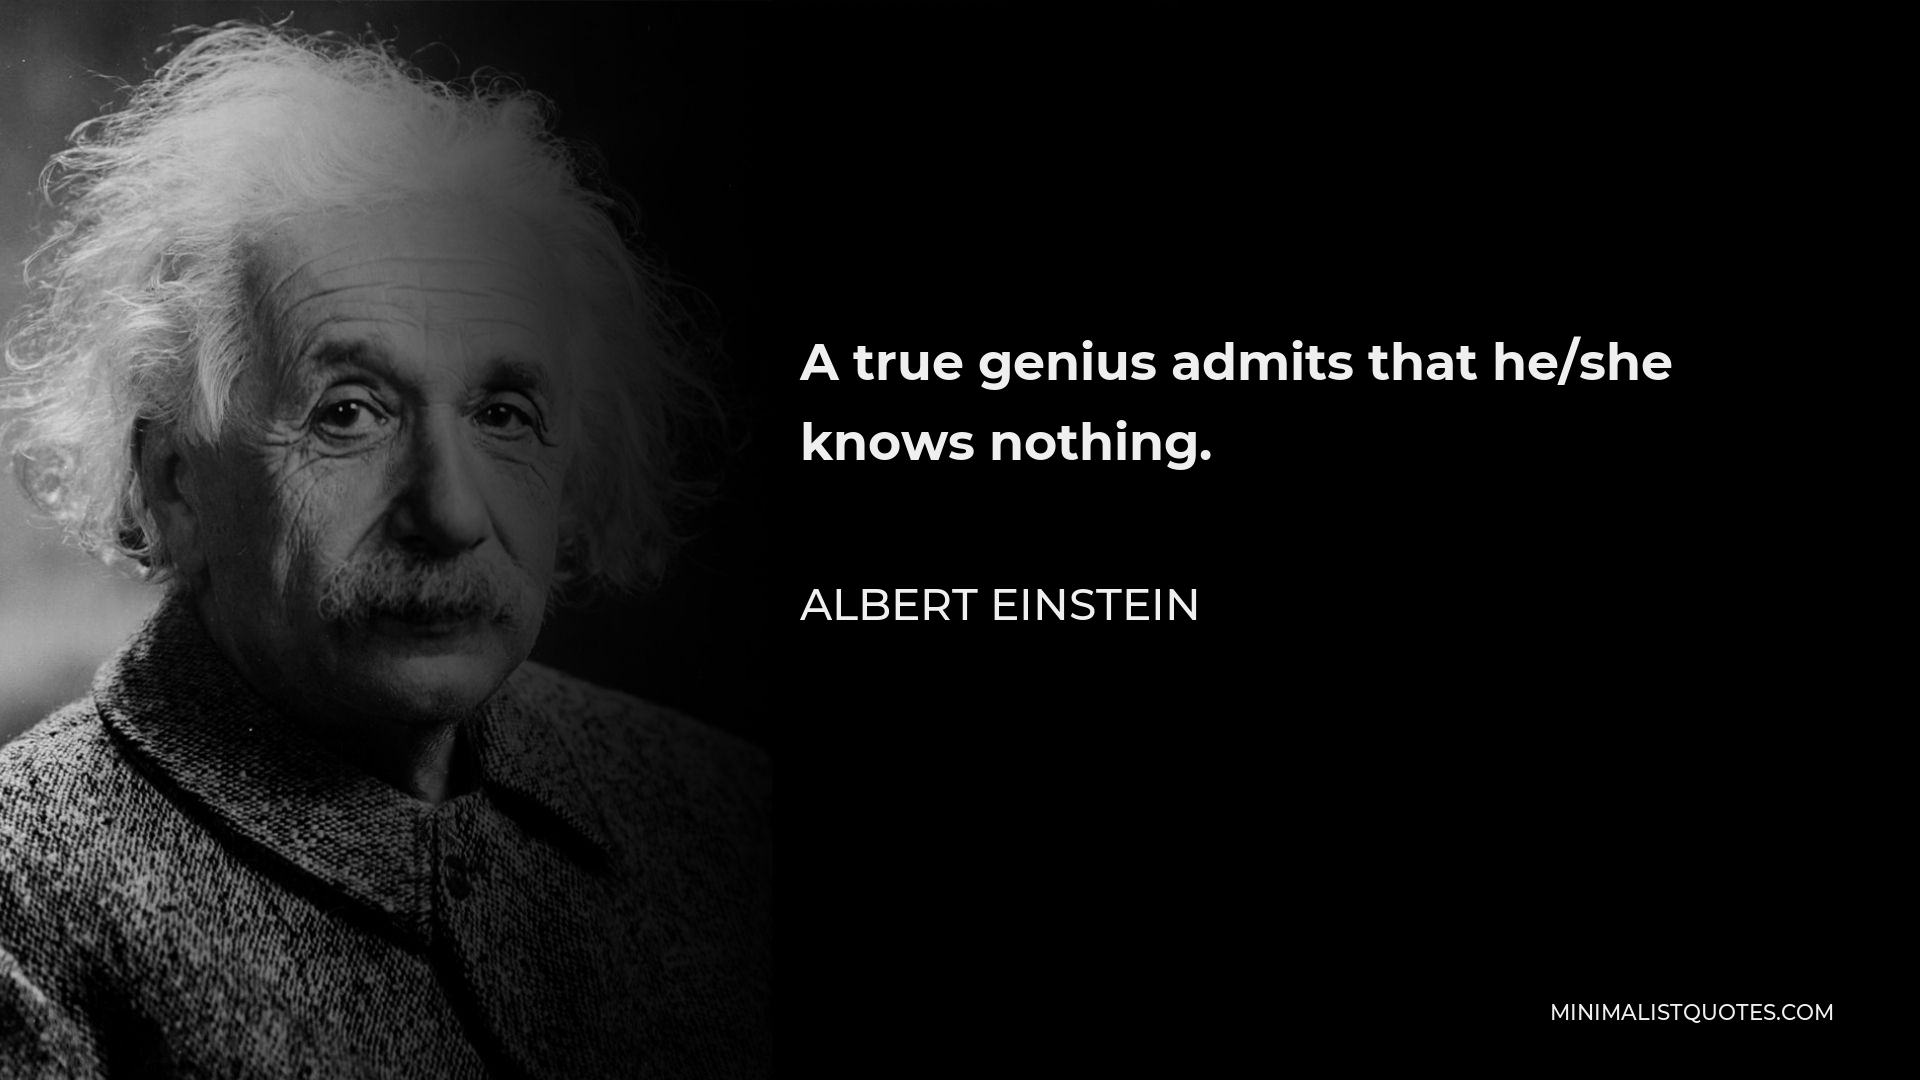 Albert Einstein Quote - A true genius admits that he/she knows nothing.